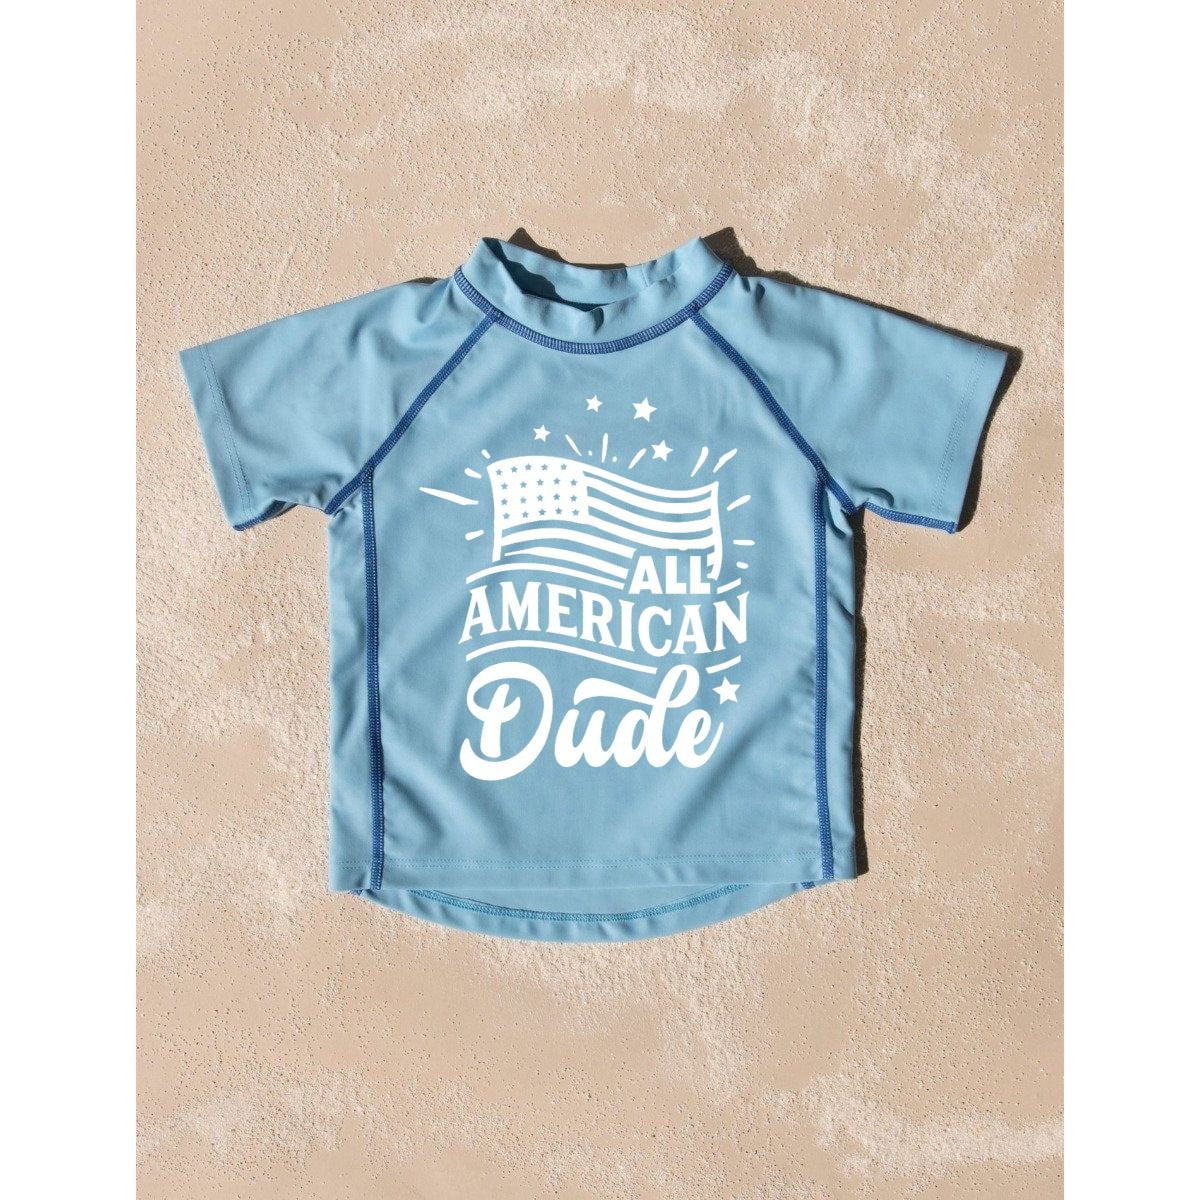 All American Dude Toddler Rashguard Swimwear UV Protection +50 - Kids 4th of July Swimsuit - Toddler Boy Rash Guard - Gift for Grandson